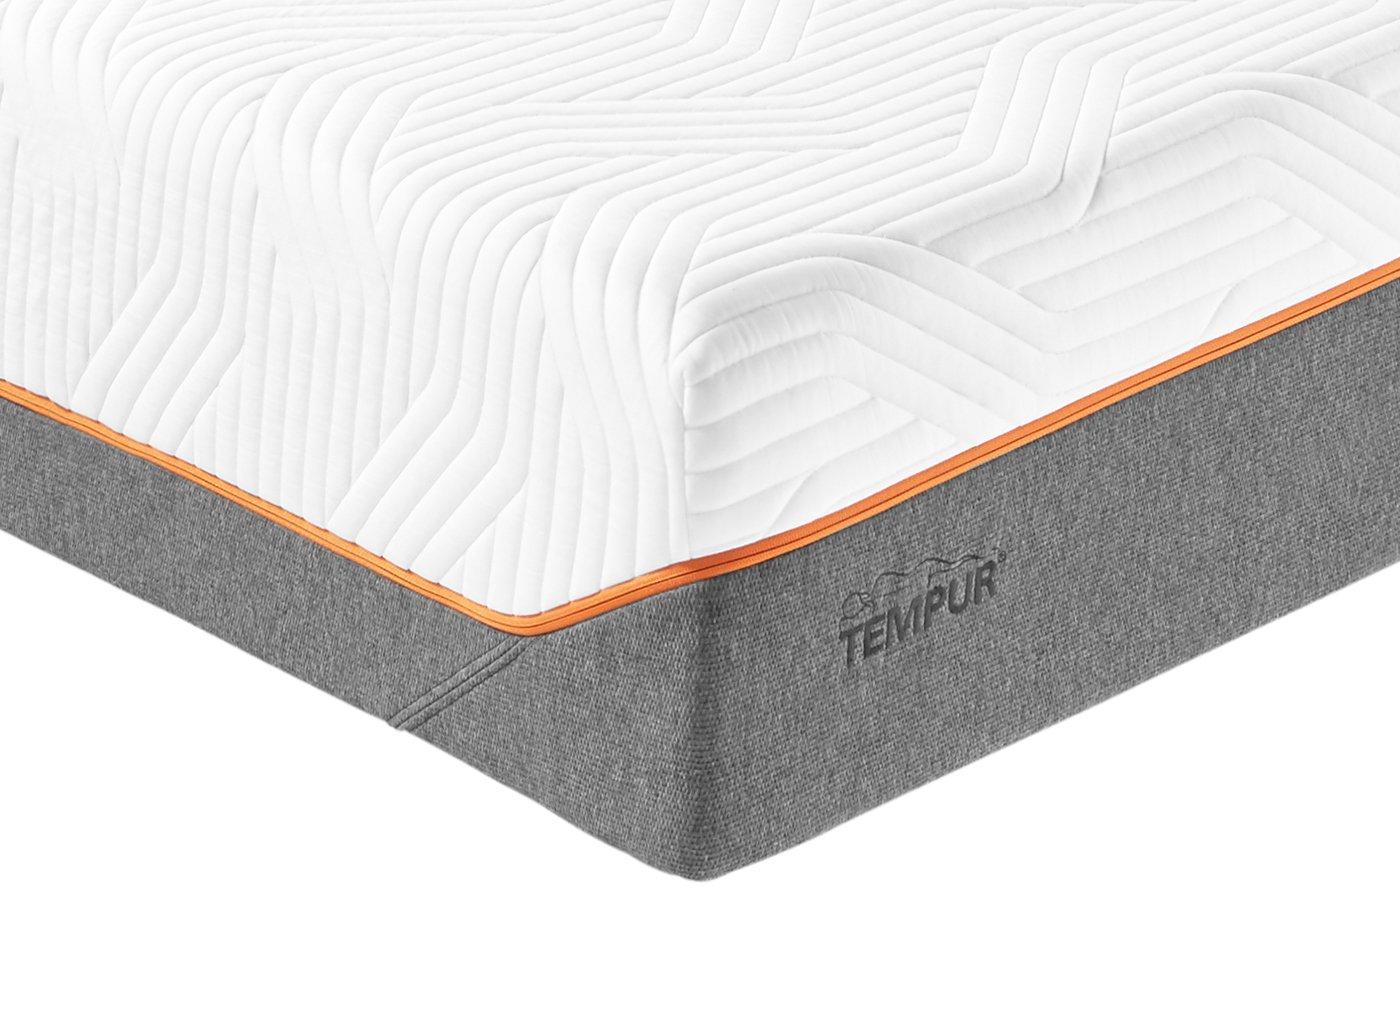 tempur cooltouch hybrid elite mattress reviews